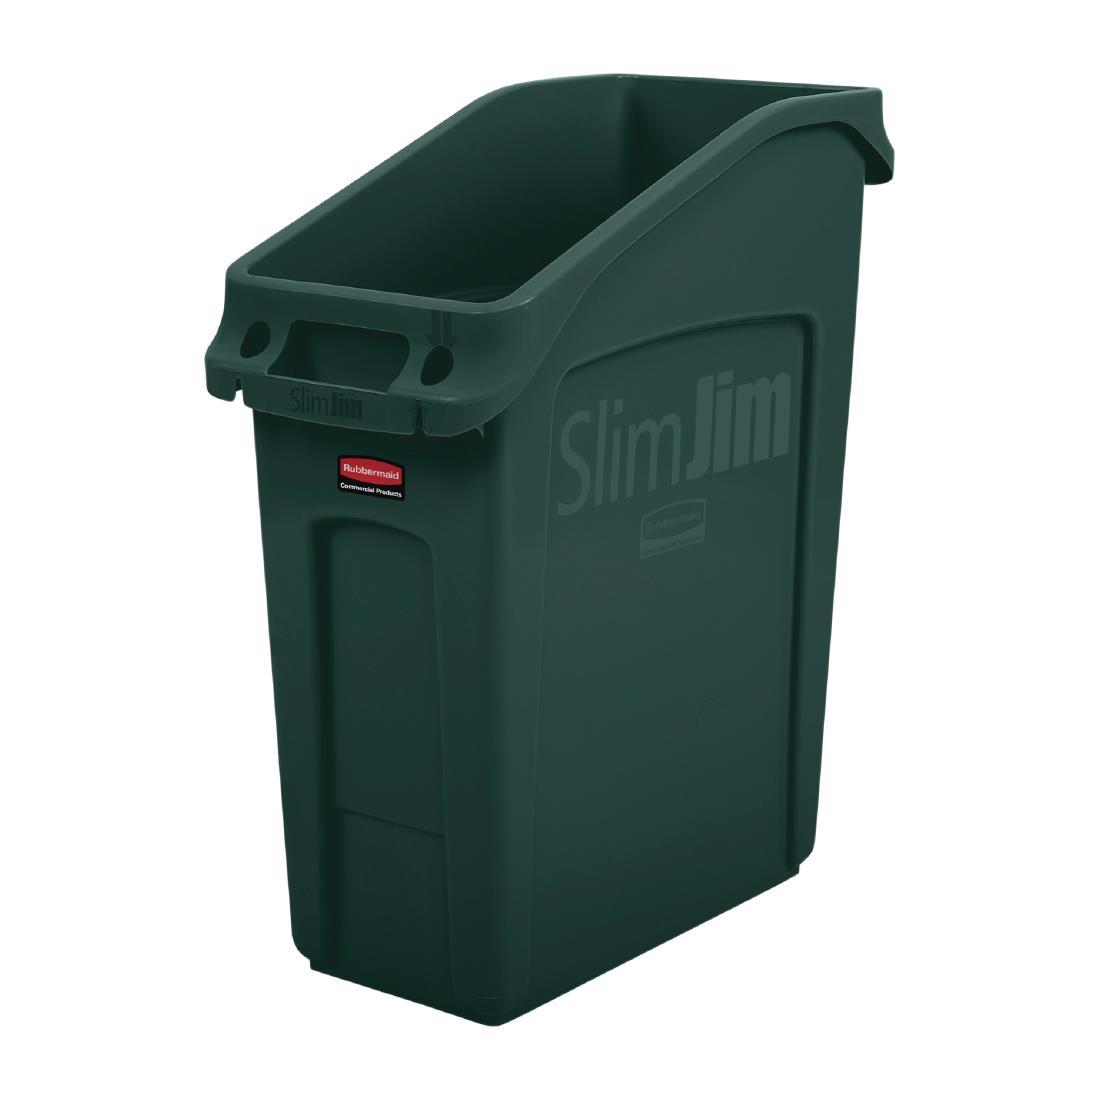 Rubbermaid Slim Jim Under-Counter Bin Green 49Ltr - FC926  - 1